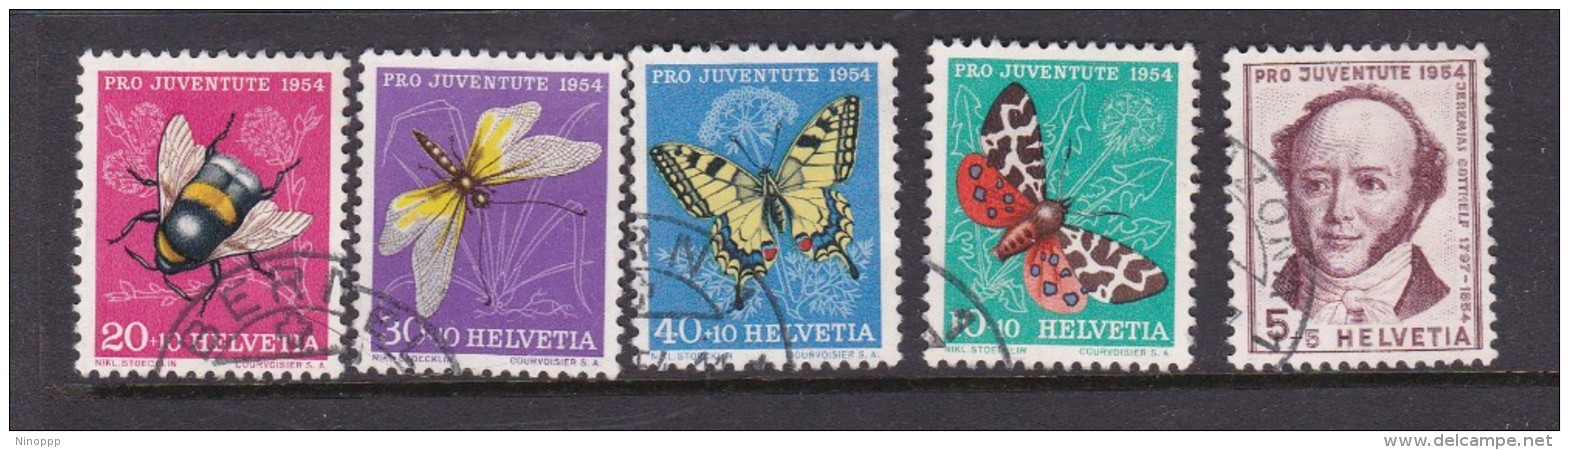 Switzerland Pro Juventute 1954 Used Set - Used Stamps